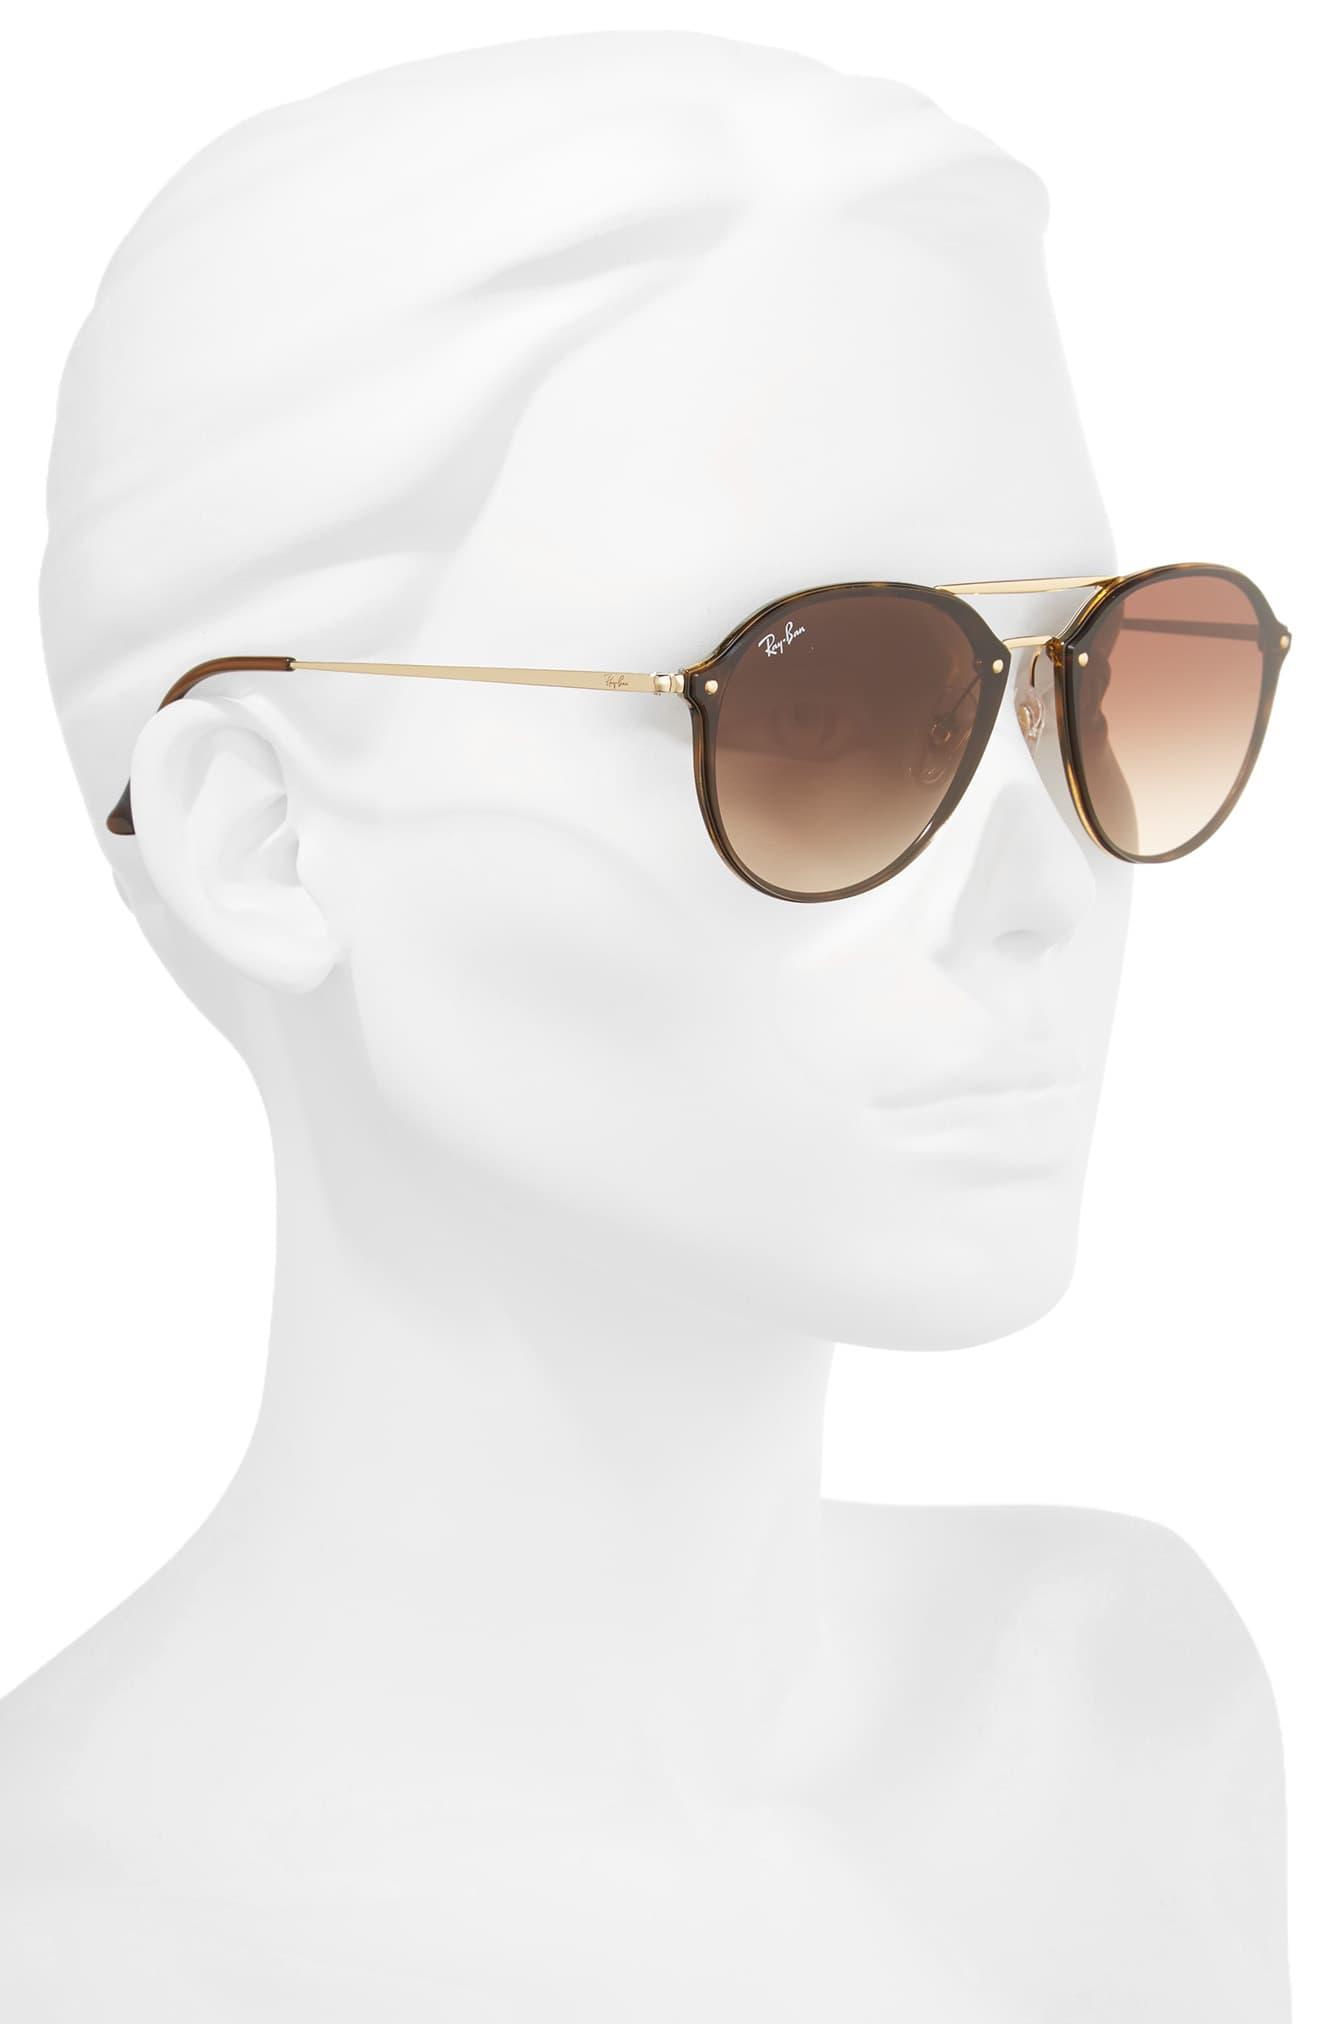 62mm gradient lens aviator sunglasses